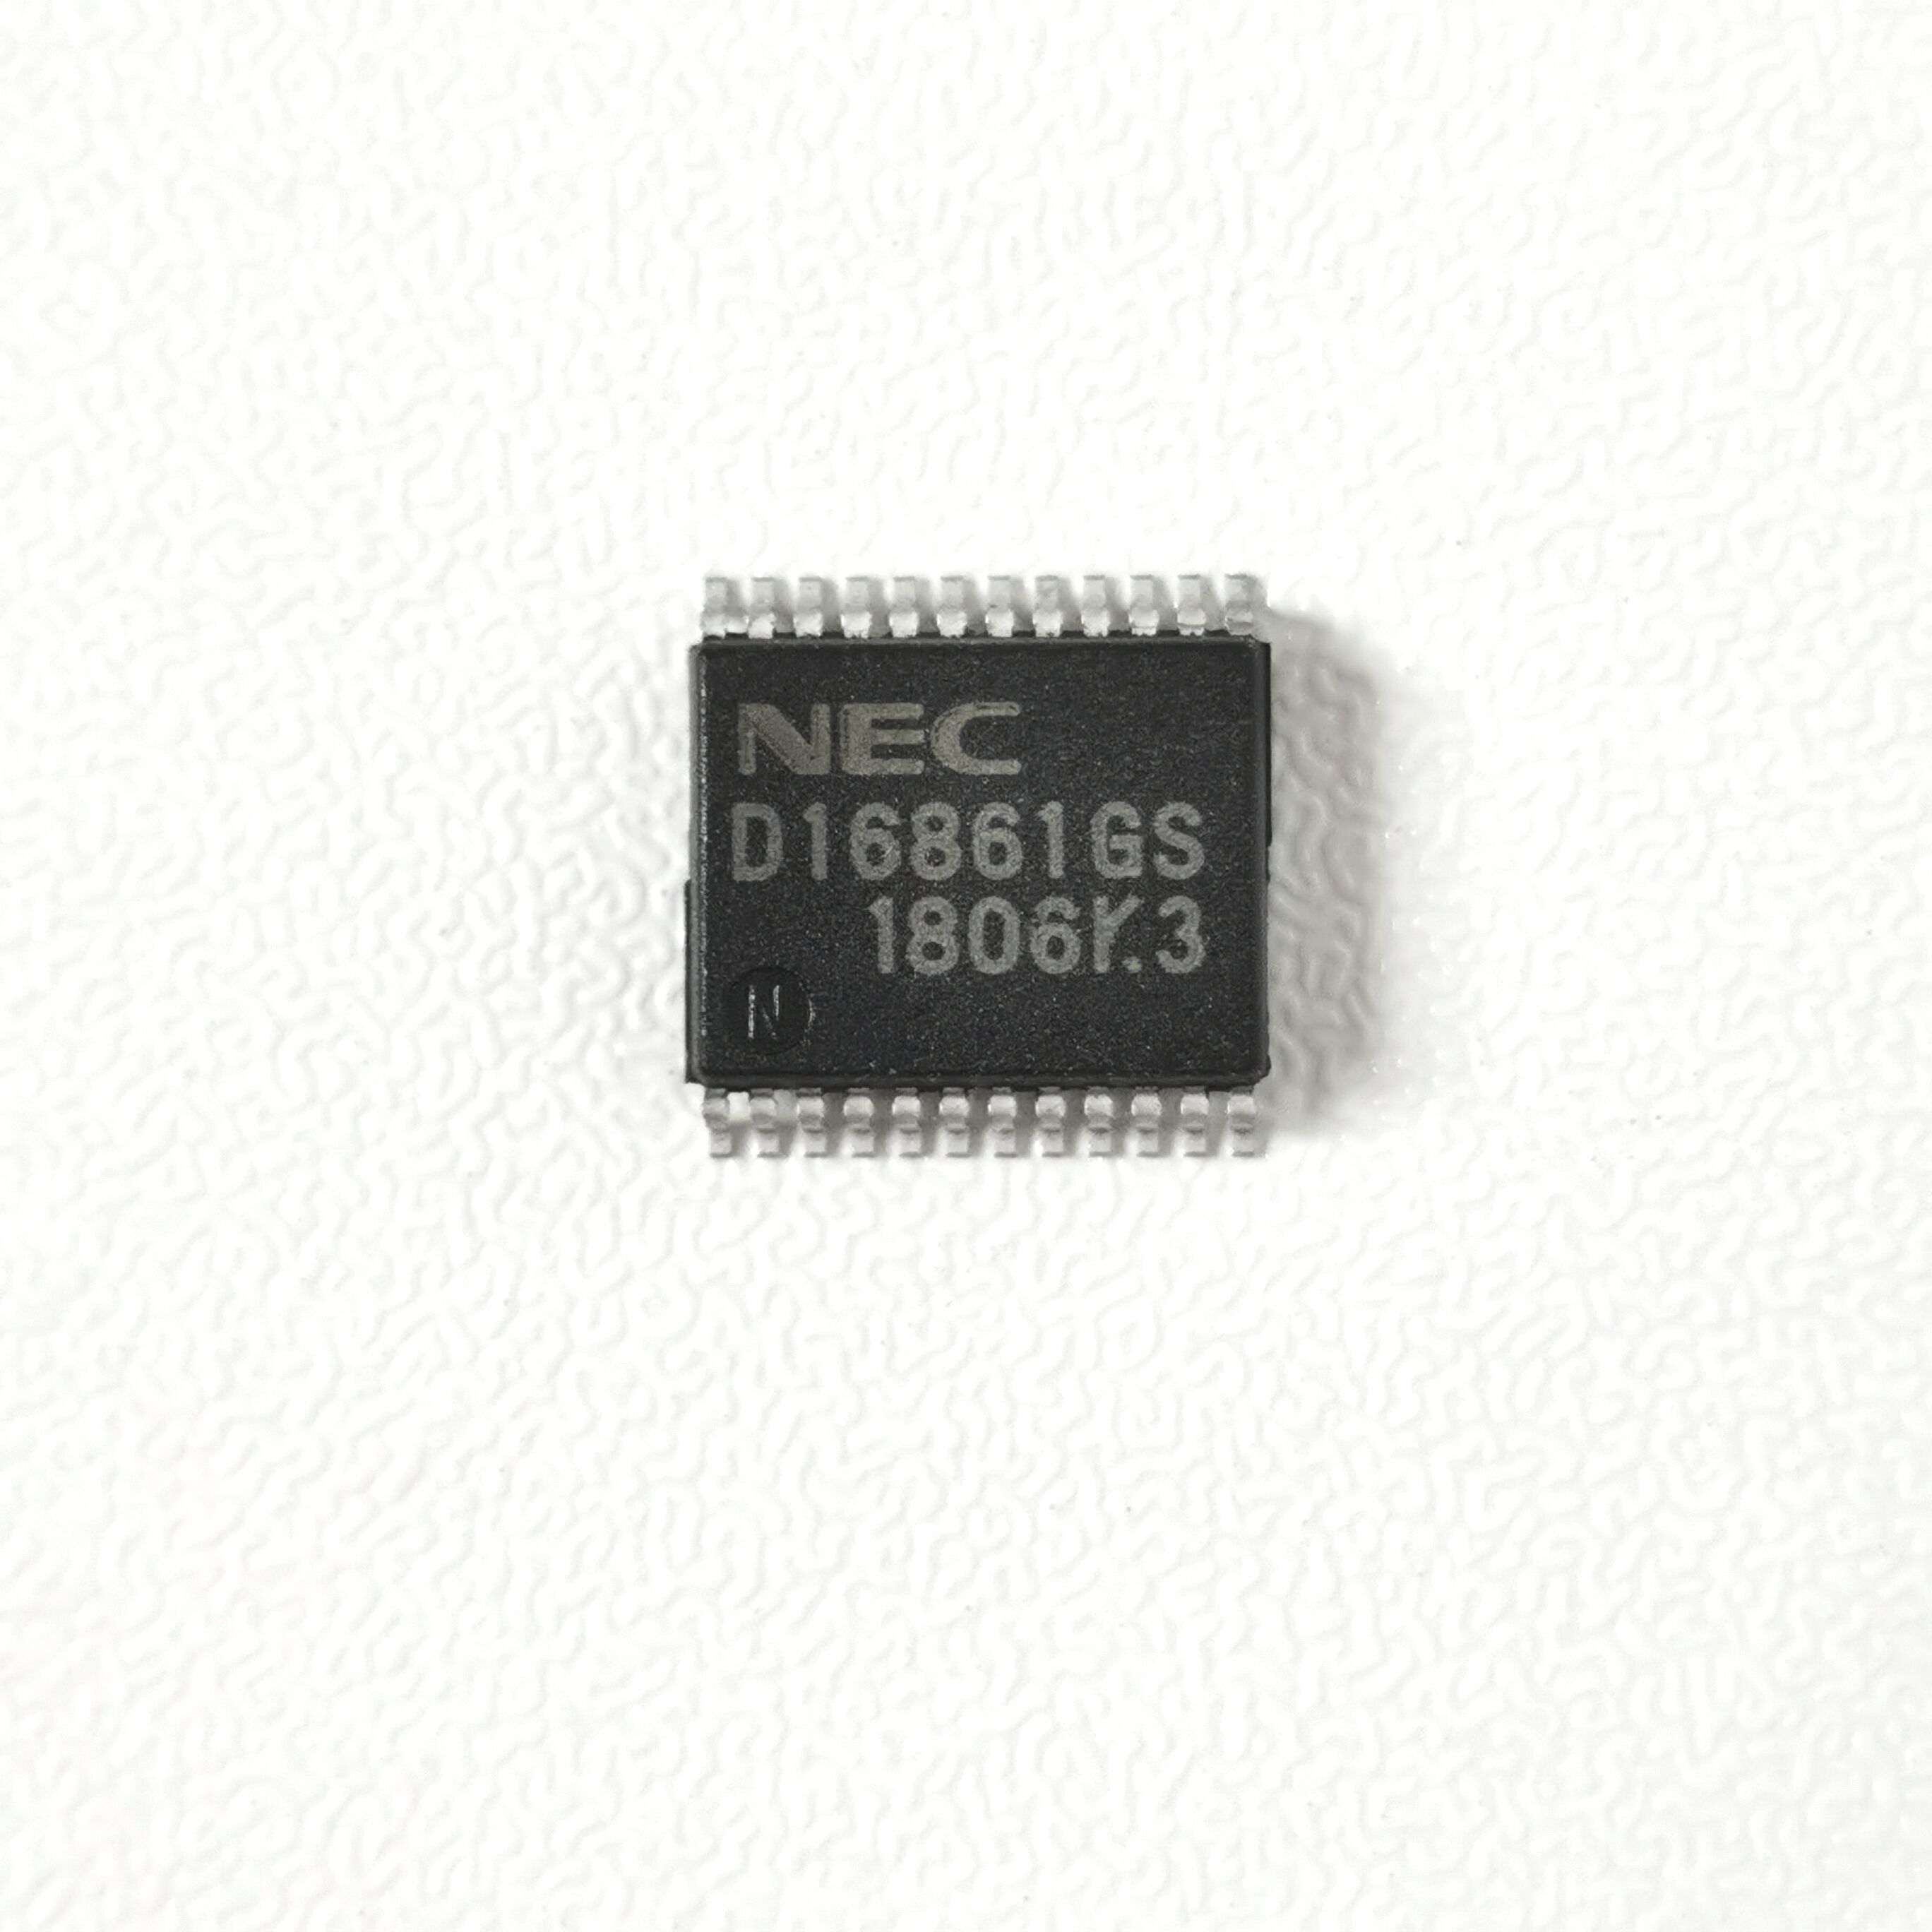 D16861GS Automotive computer chip computer board ignition driver 